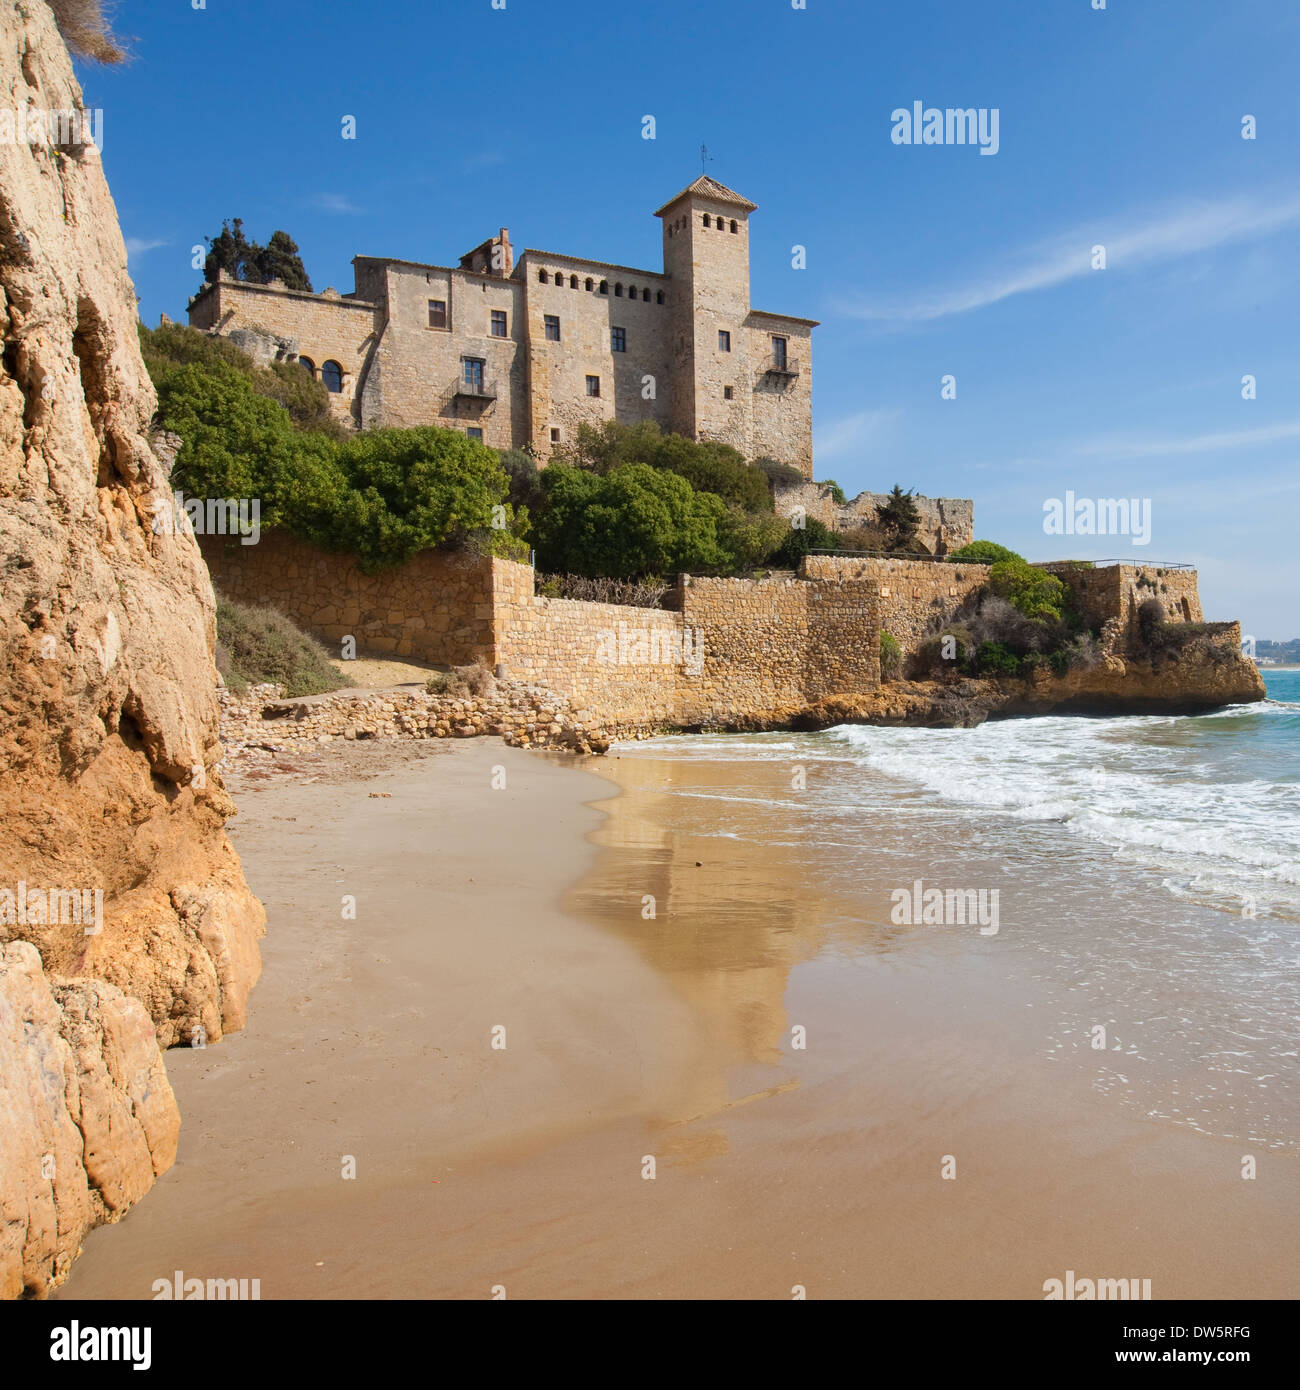 Castle of Tamarit from the beach of Cala Jovera in Tarragona, Spain. Stock Photo